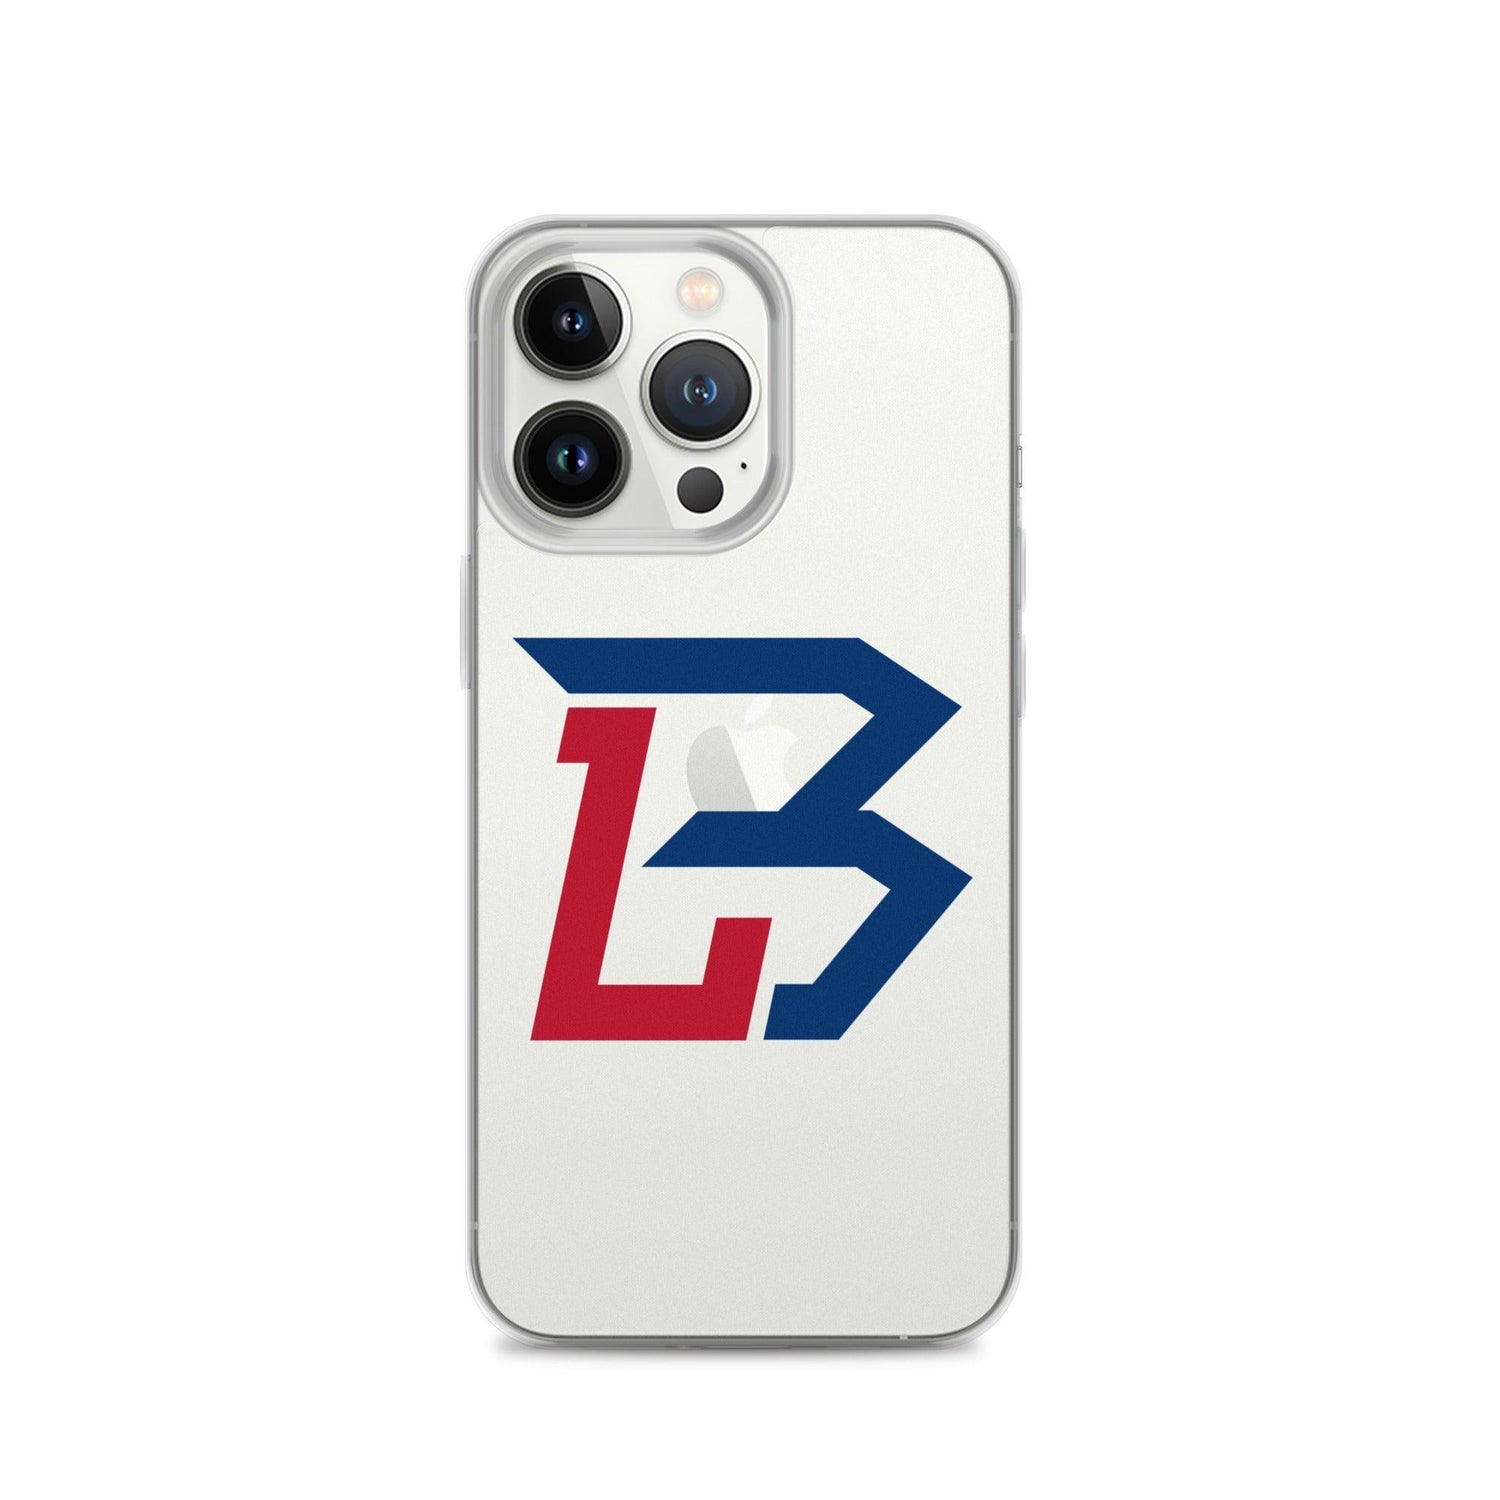 Brendon Little "Essential" iPhone Case - Fan Arch